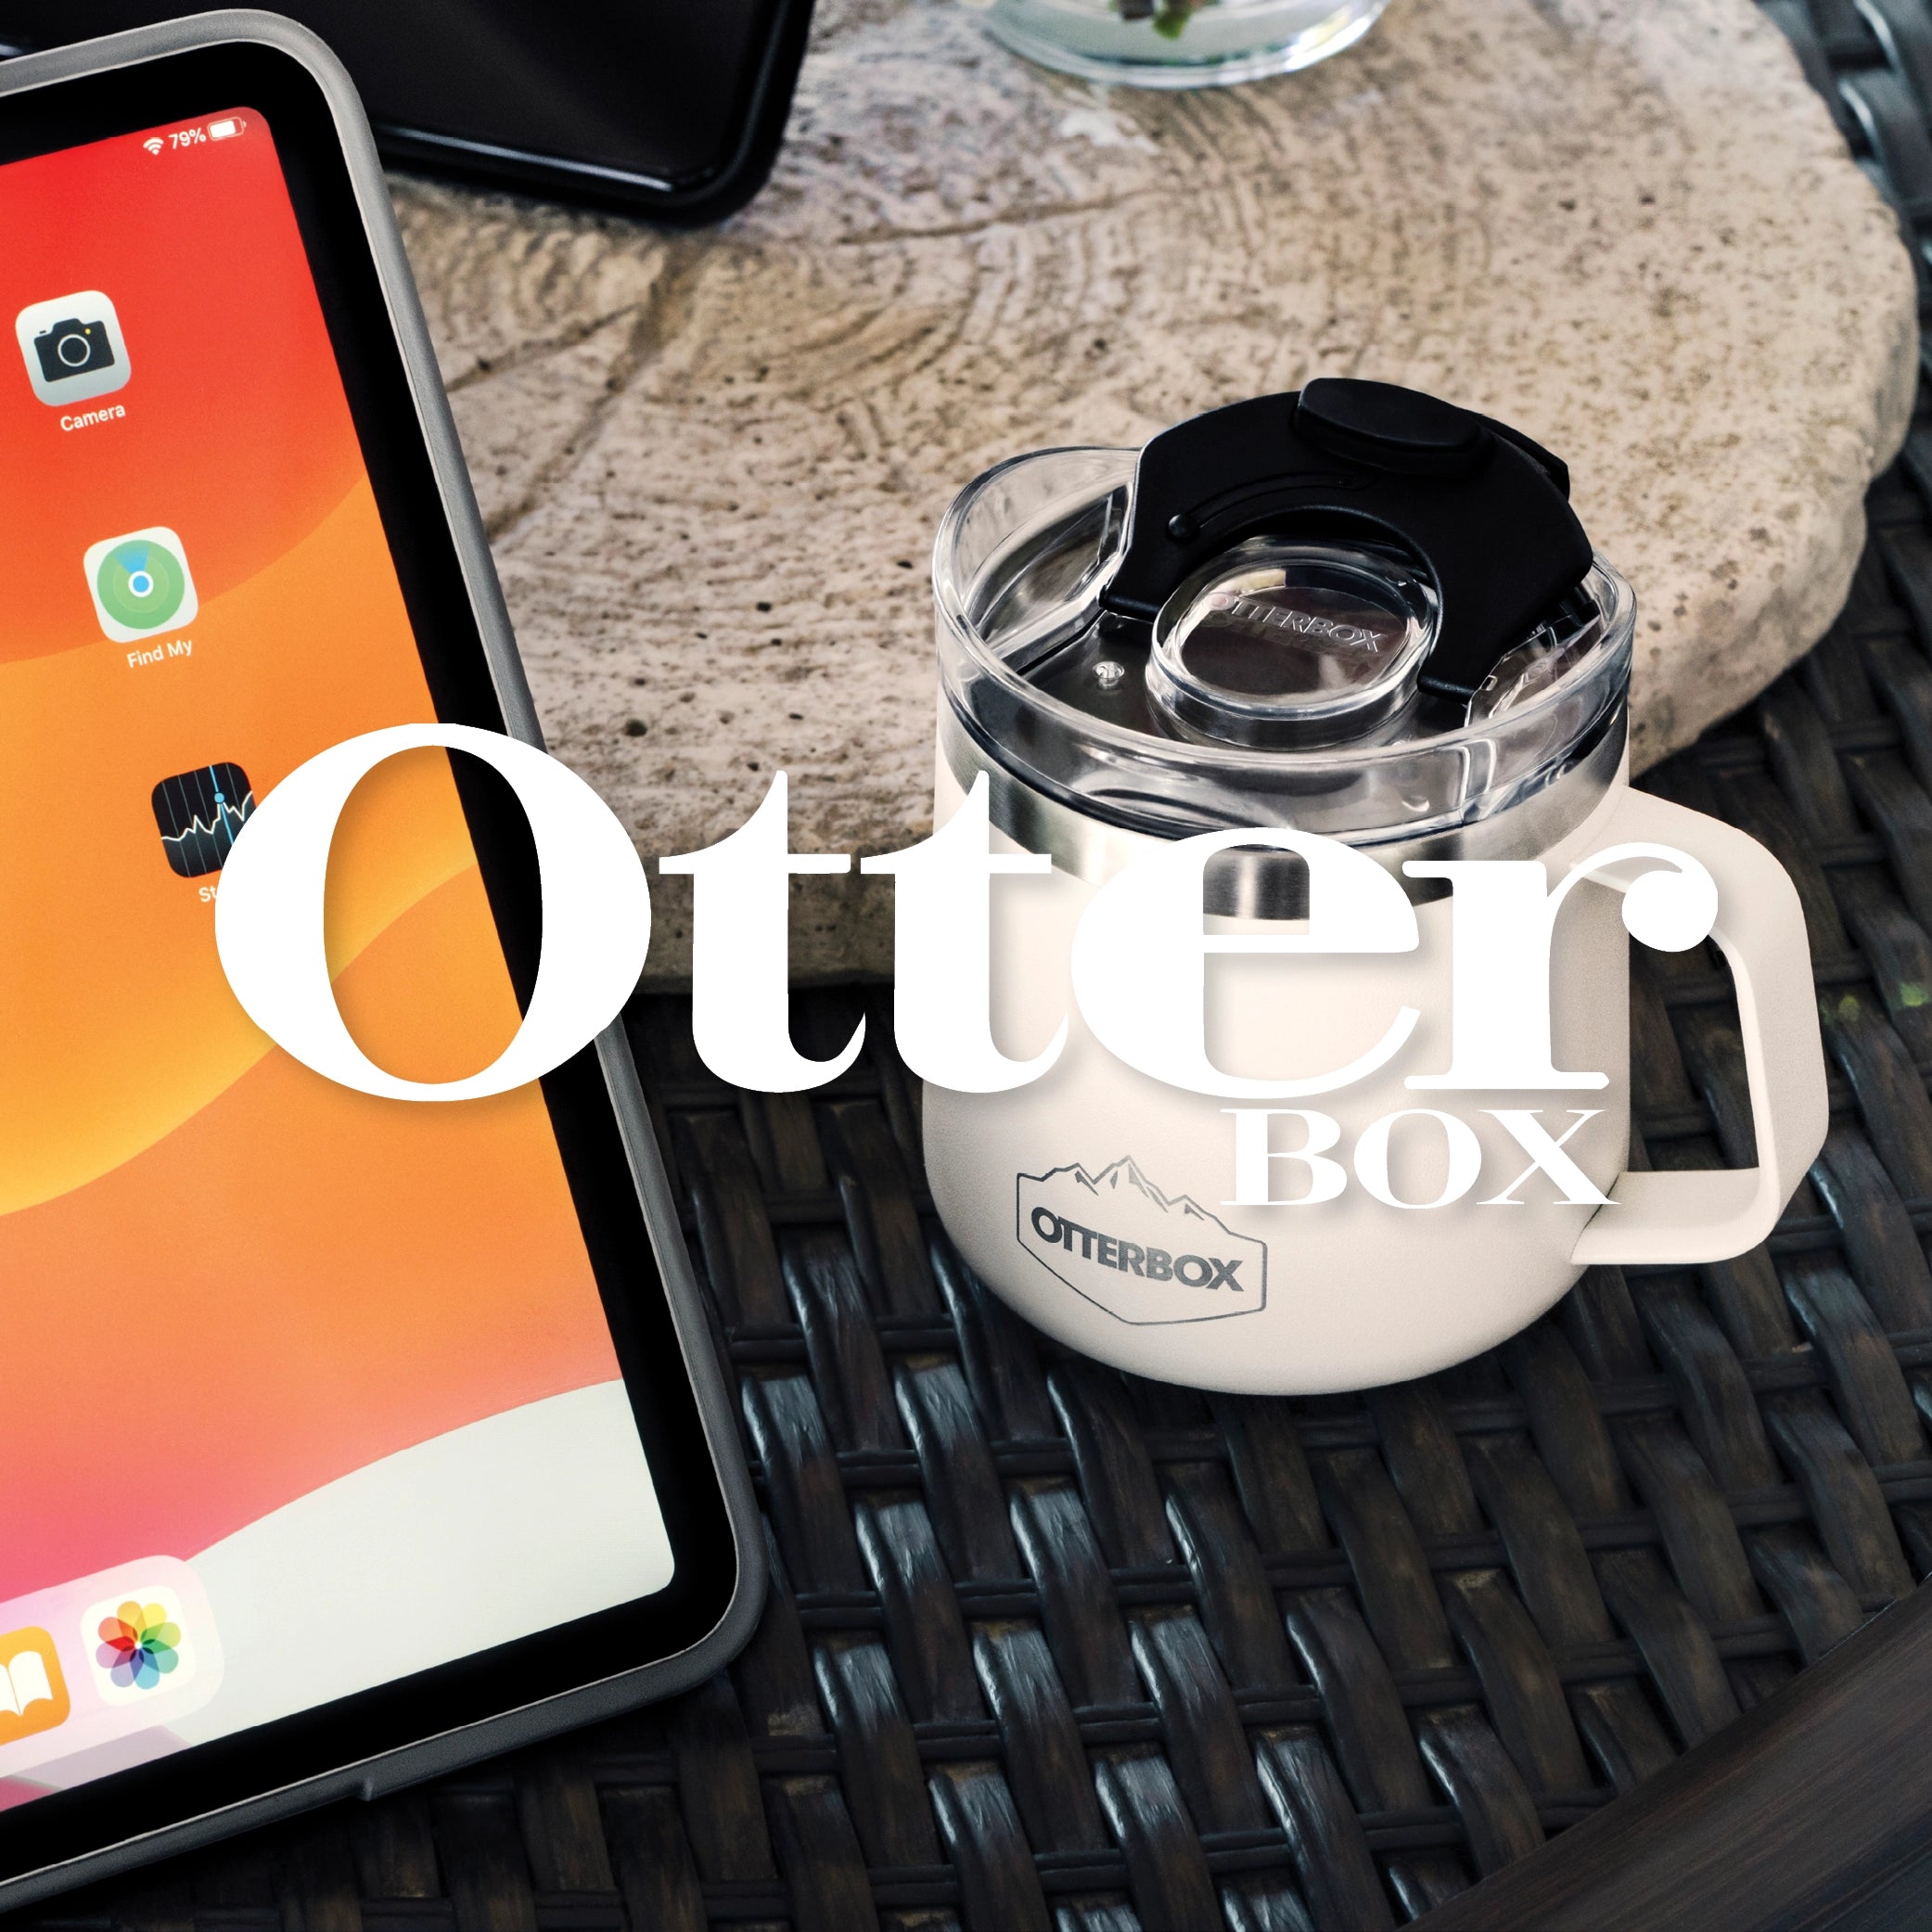 Otterbox Elevation Mug in white sitting on desk next to iPad